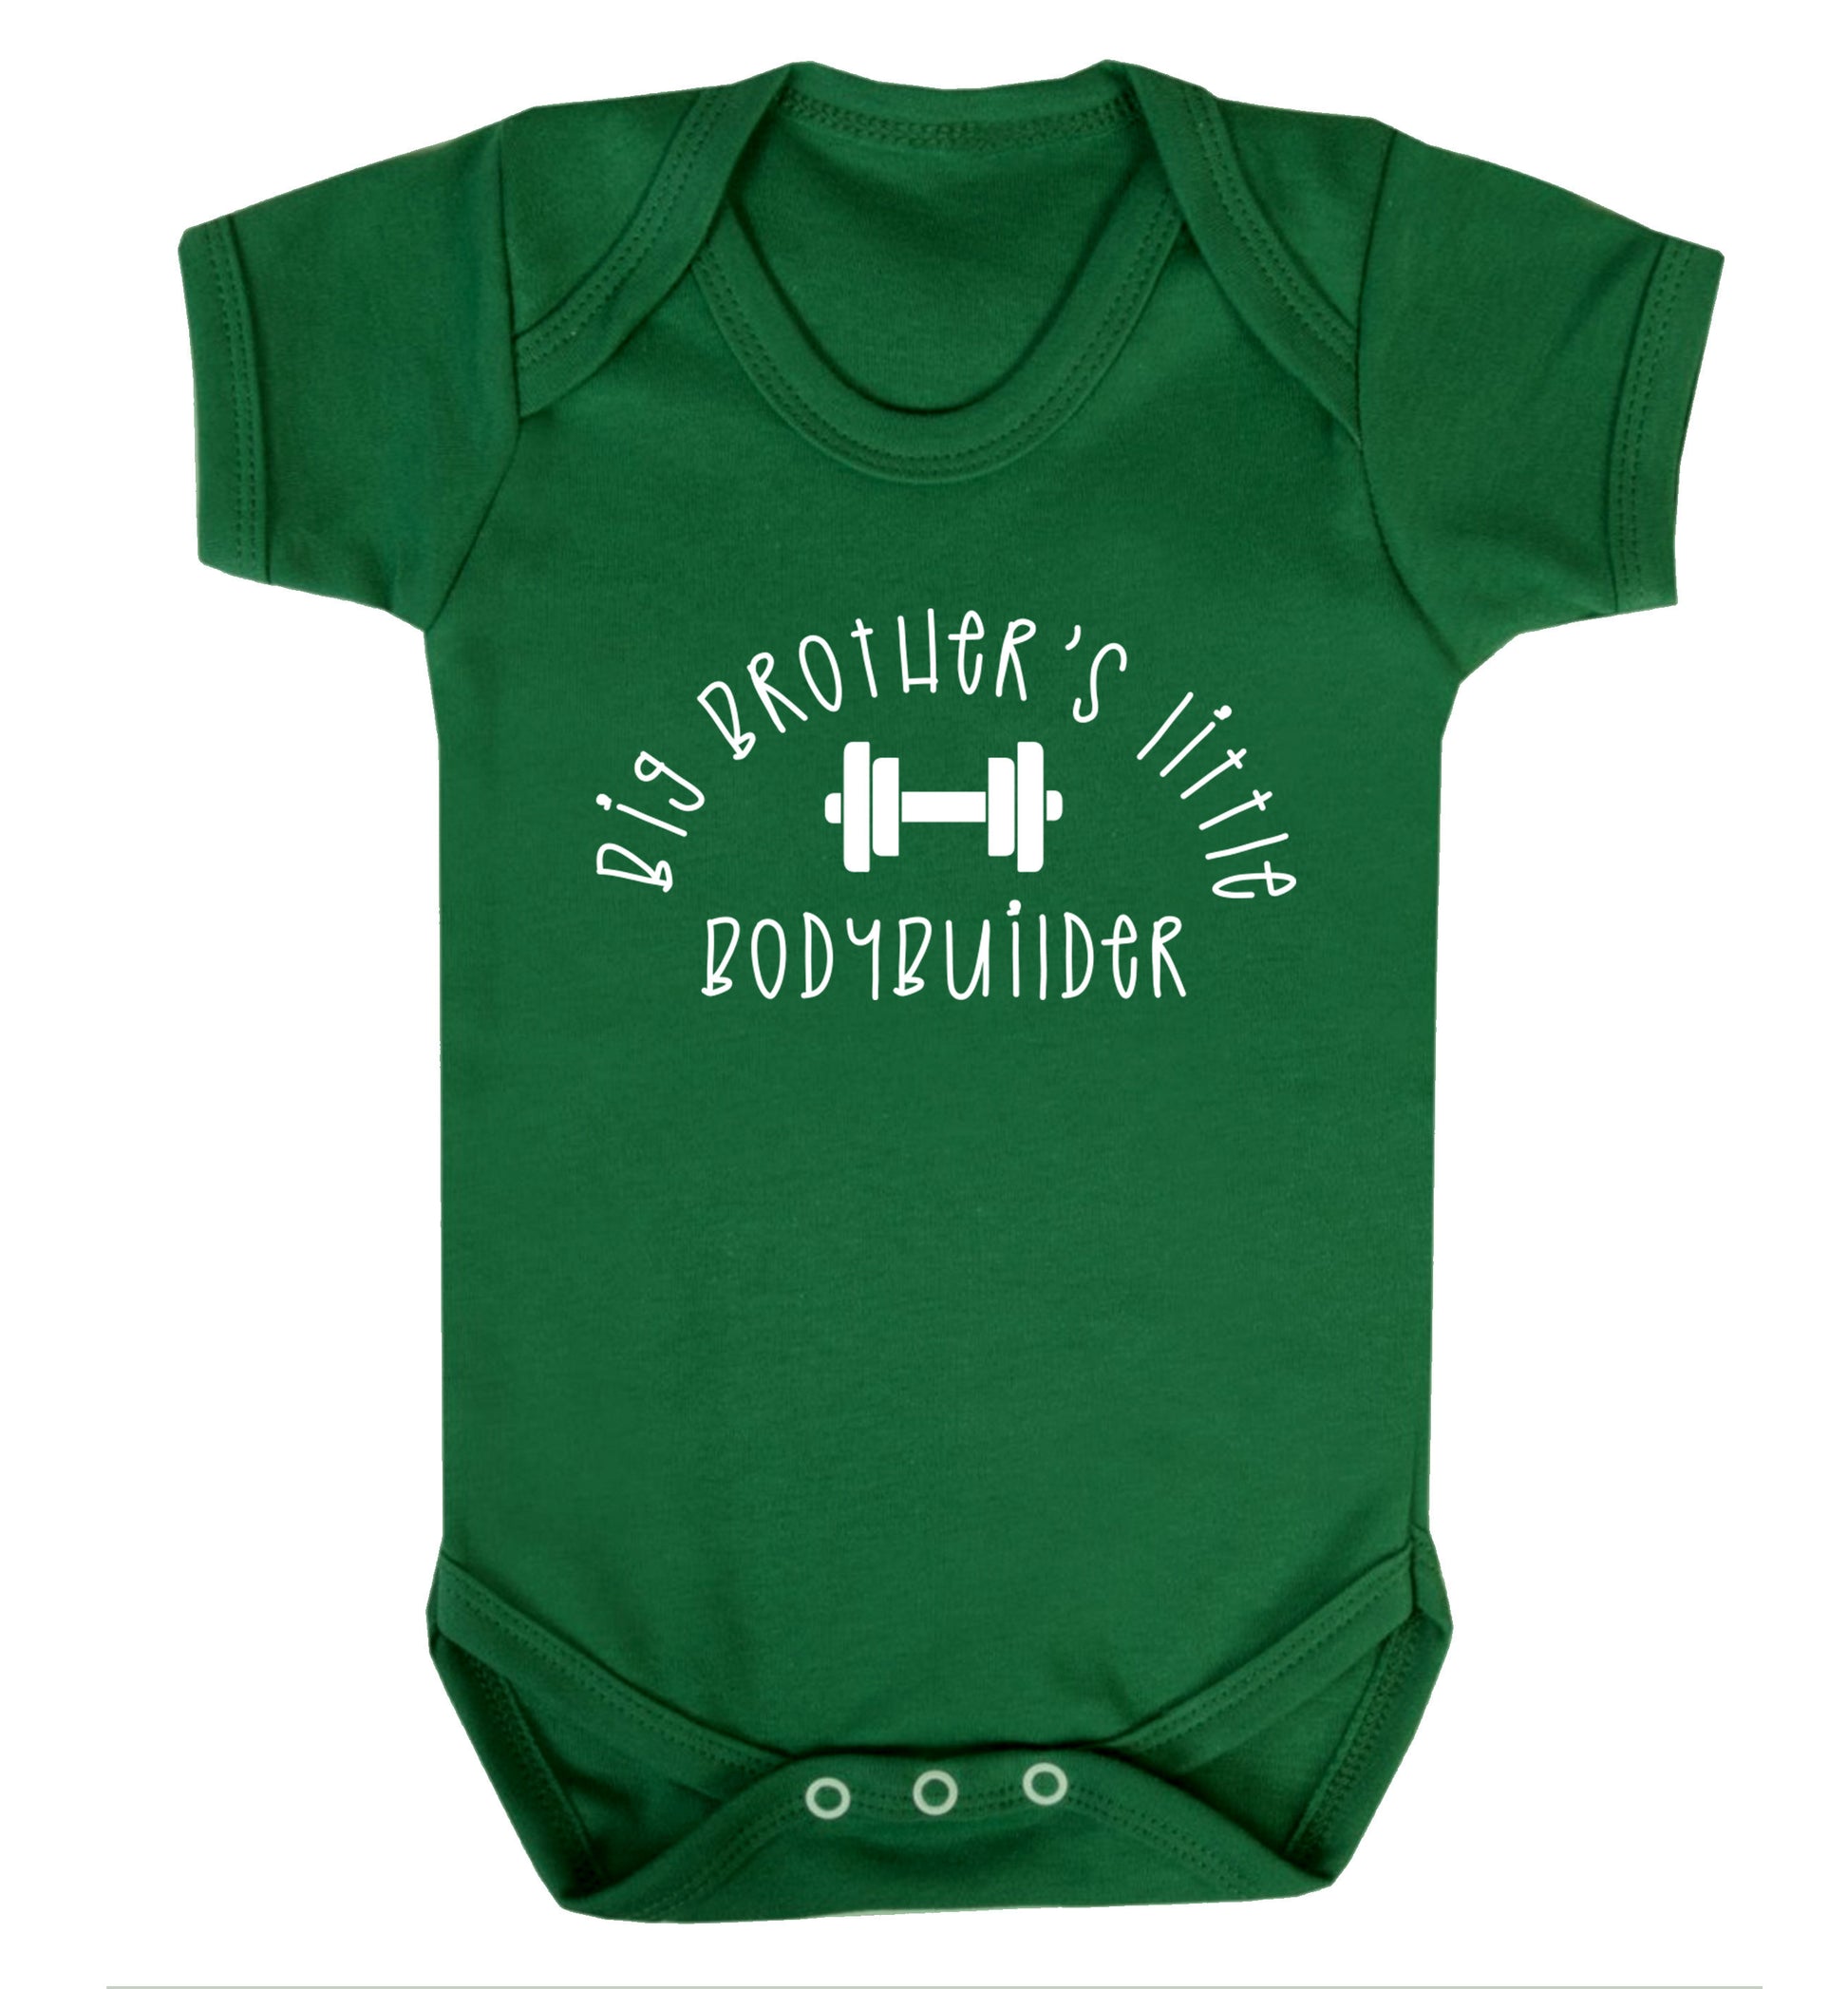 Big brother's little bodybuilder Baby Vest green 18-24 months